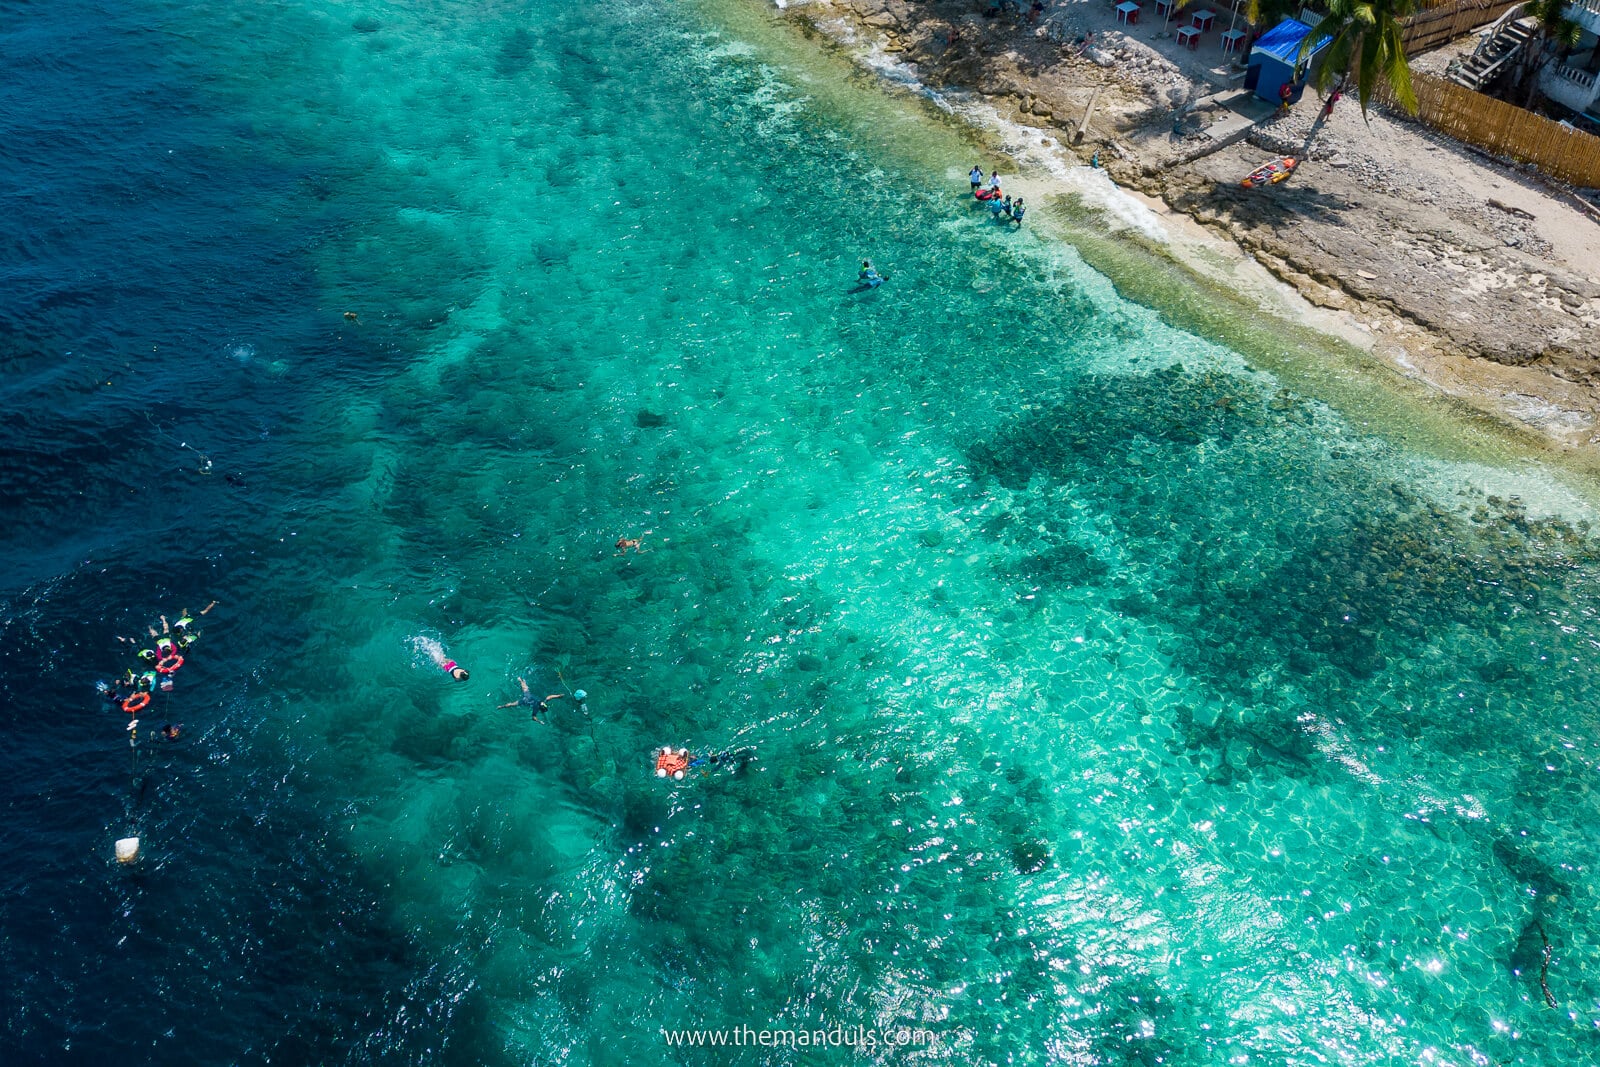 panagsama beach moalboal, moalboal sardine run, tourist spots cebu, best attractions cebu, things to do on cebu island, cebu itinerary, moalboal sardines, cebu sardine run, moalboal snorkelling, philippines, sea turtlea, panagsama beach drone